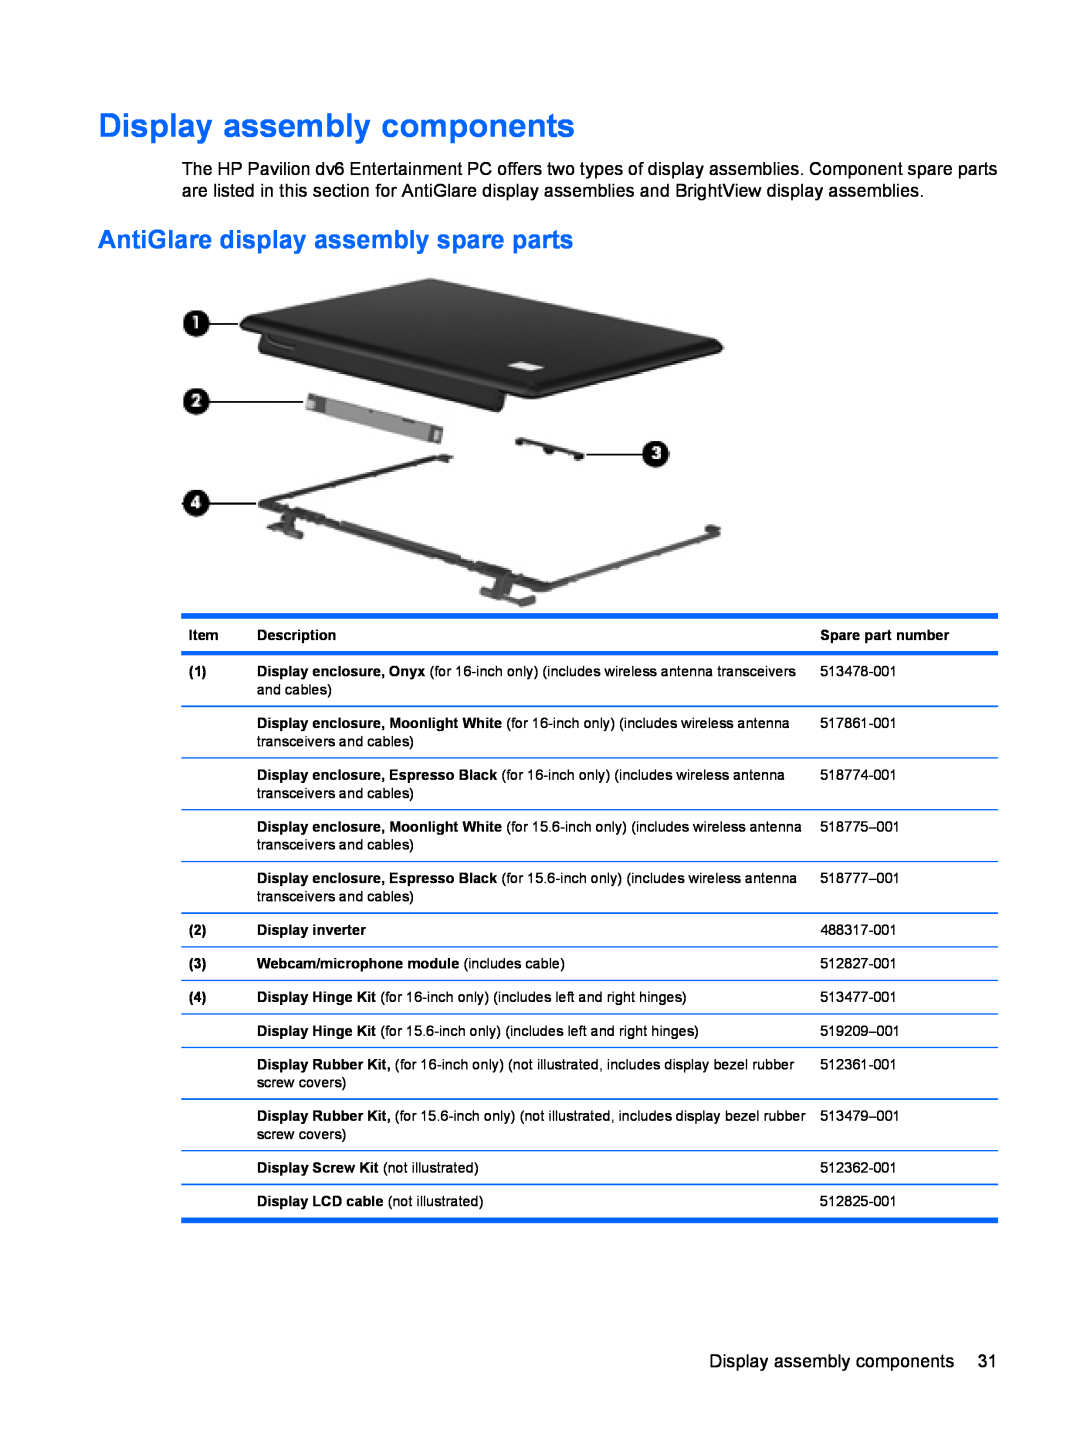 HP DV6 manual Display assembly components, AntiGlare display assembly spare parts 